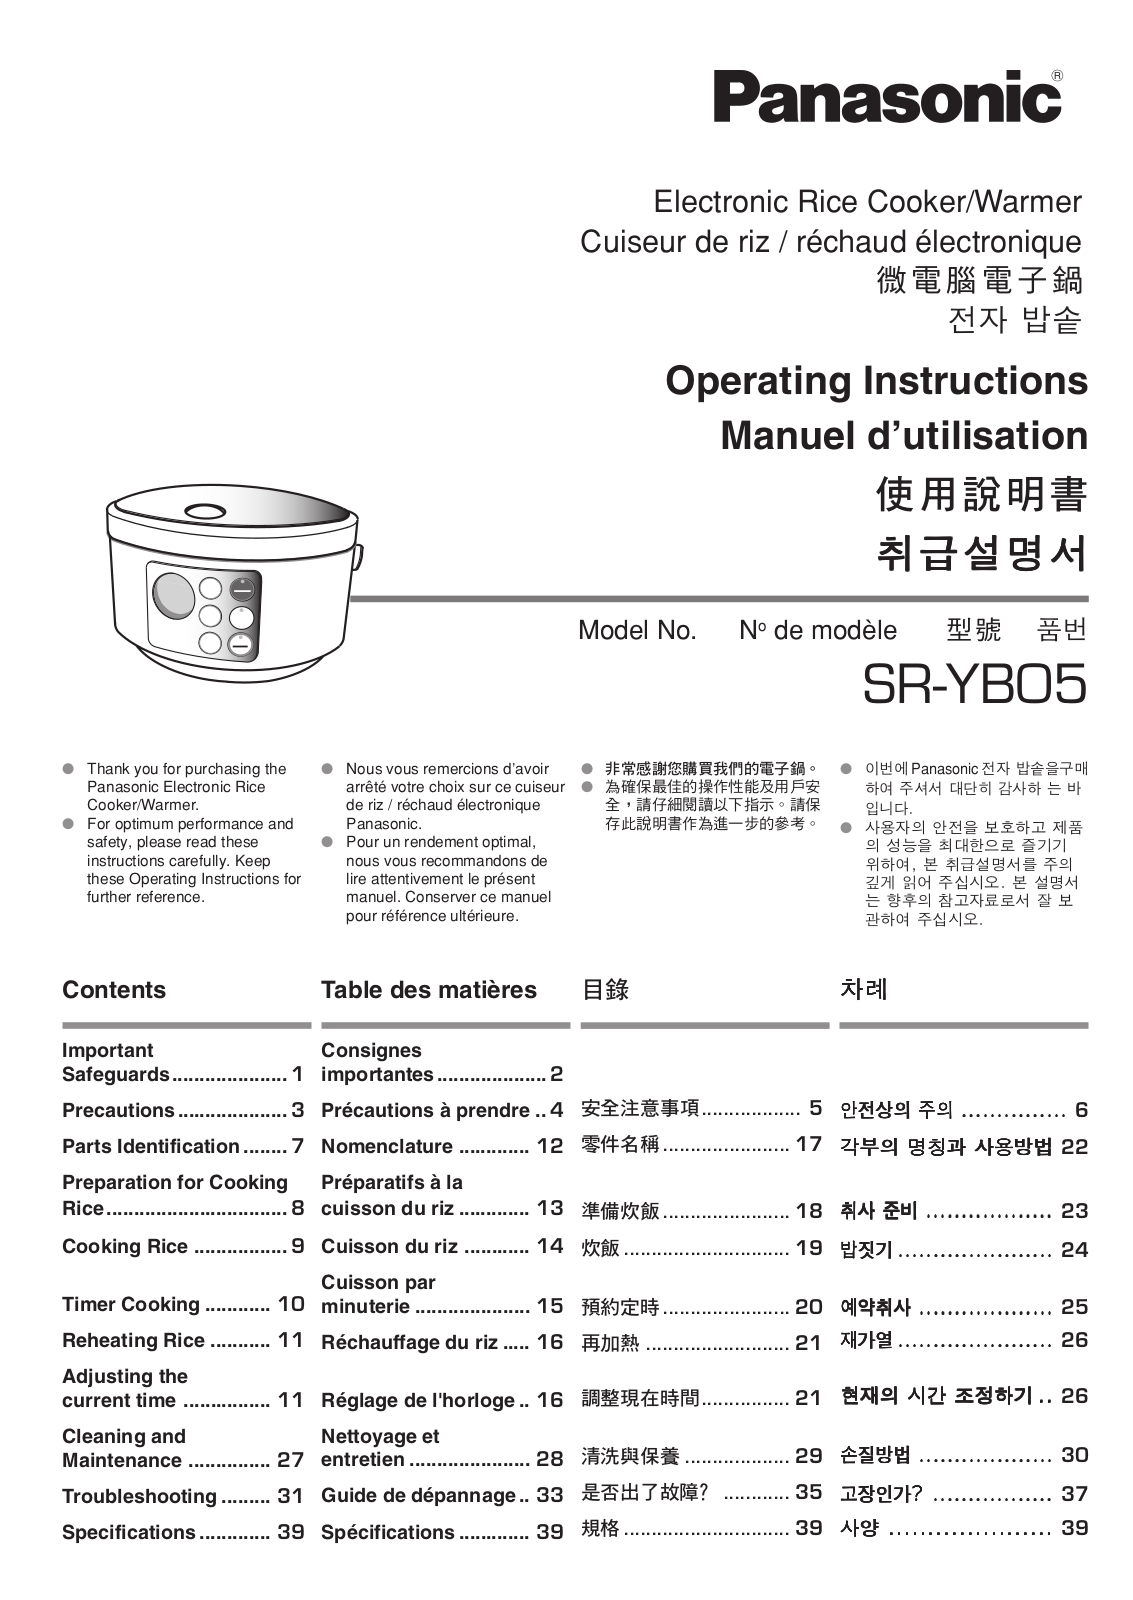 Panasonic Sr-ybo5 Owner's Manual